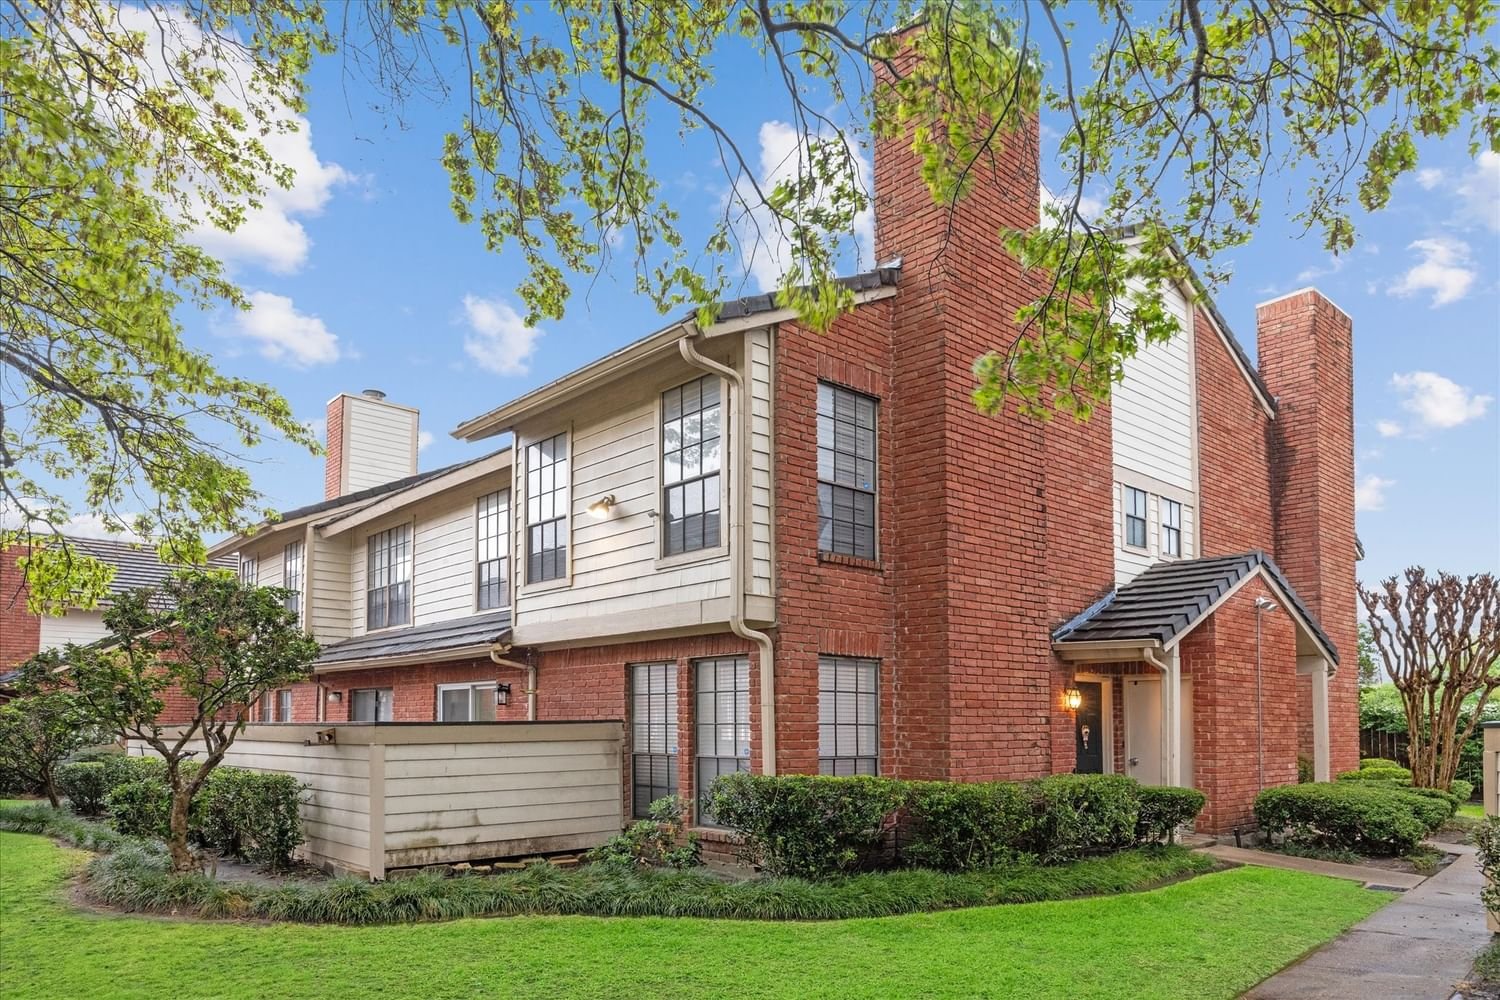 Real estate property located at 2211 Kirkwood #47, Harris, Lakeside Green Condo Amd, Houston, TX, US